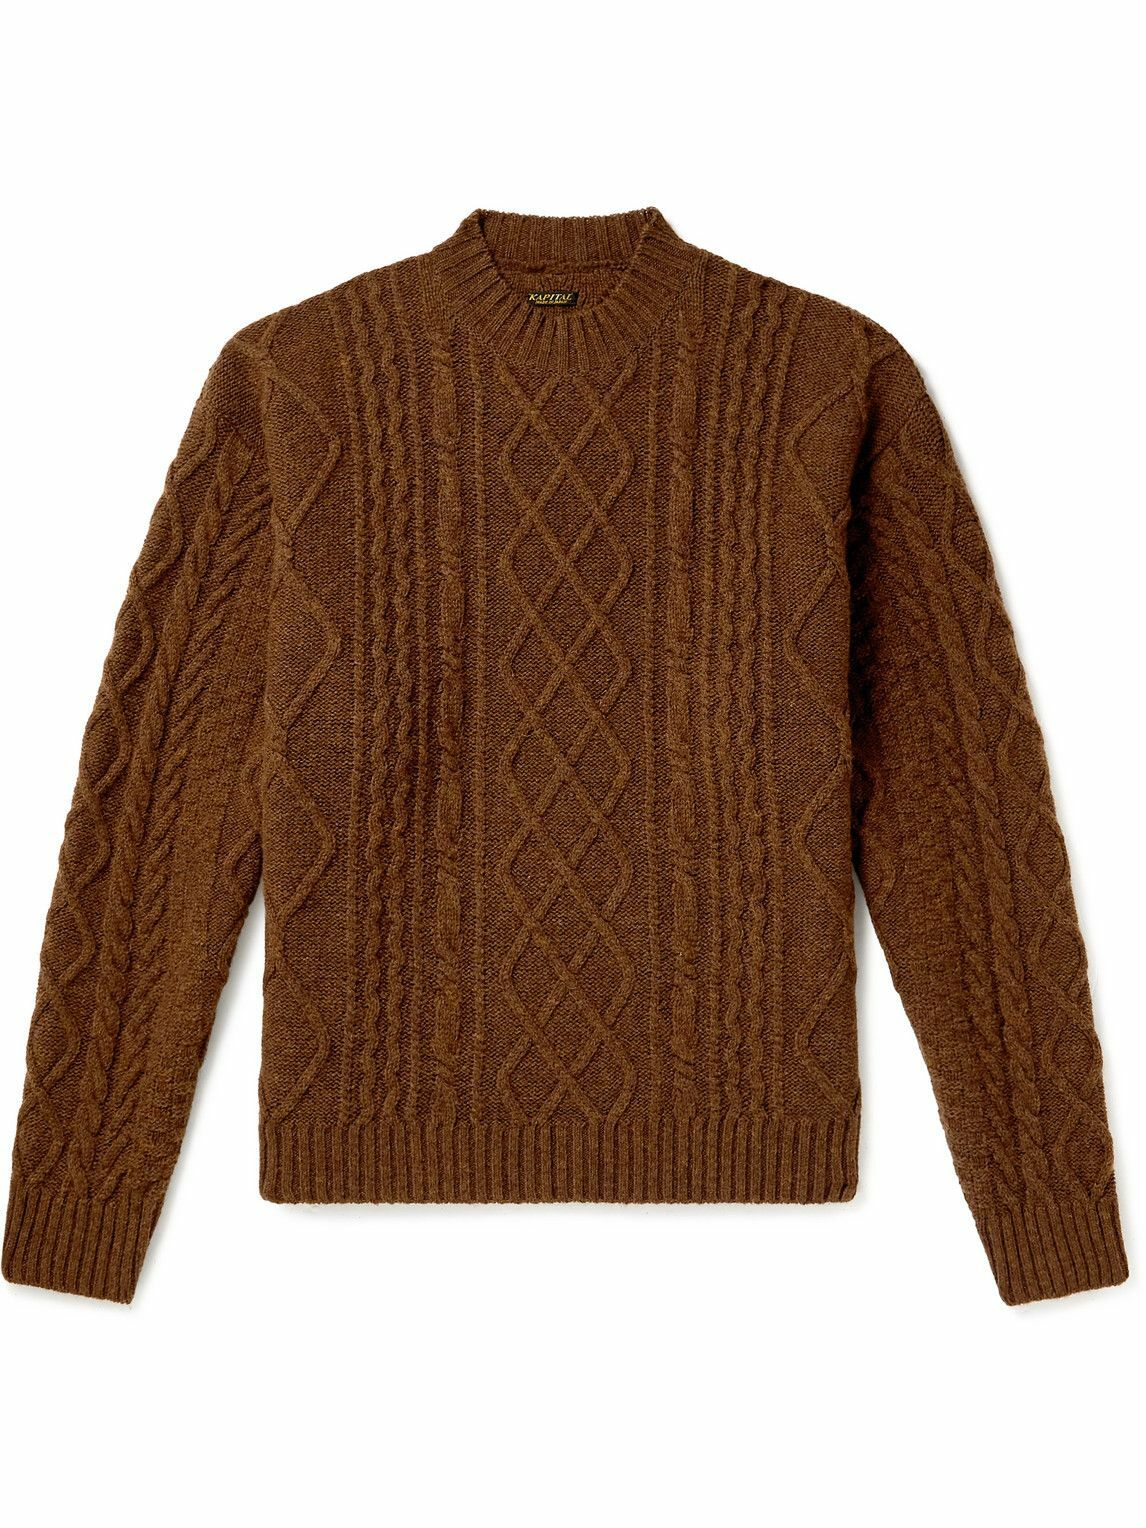 KAPITAL - Intarsia Cable-Knit Wool-Blend Sweater - Brown KAPITAL